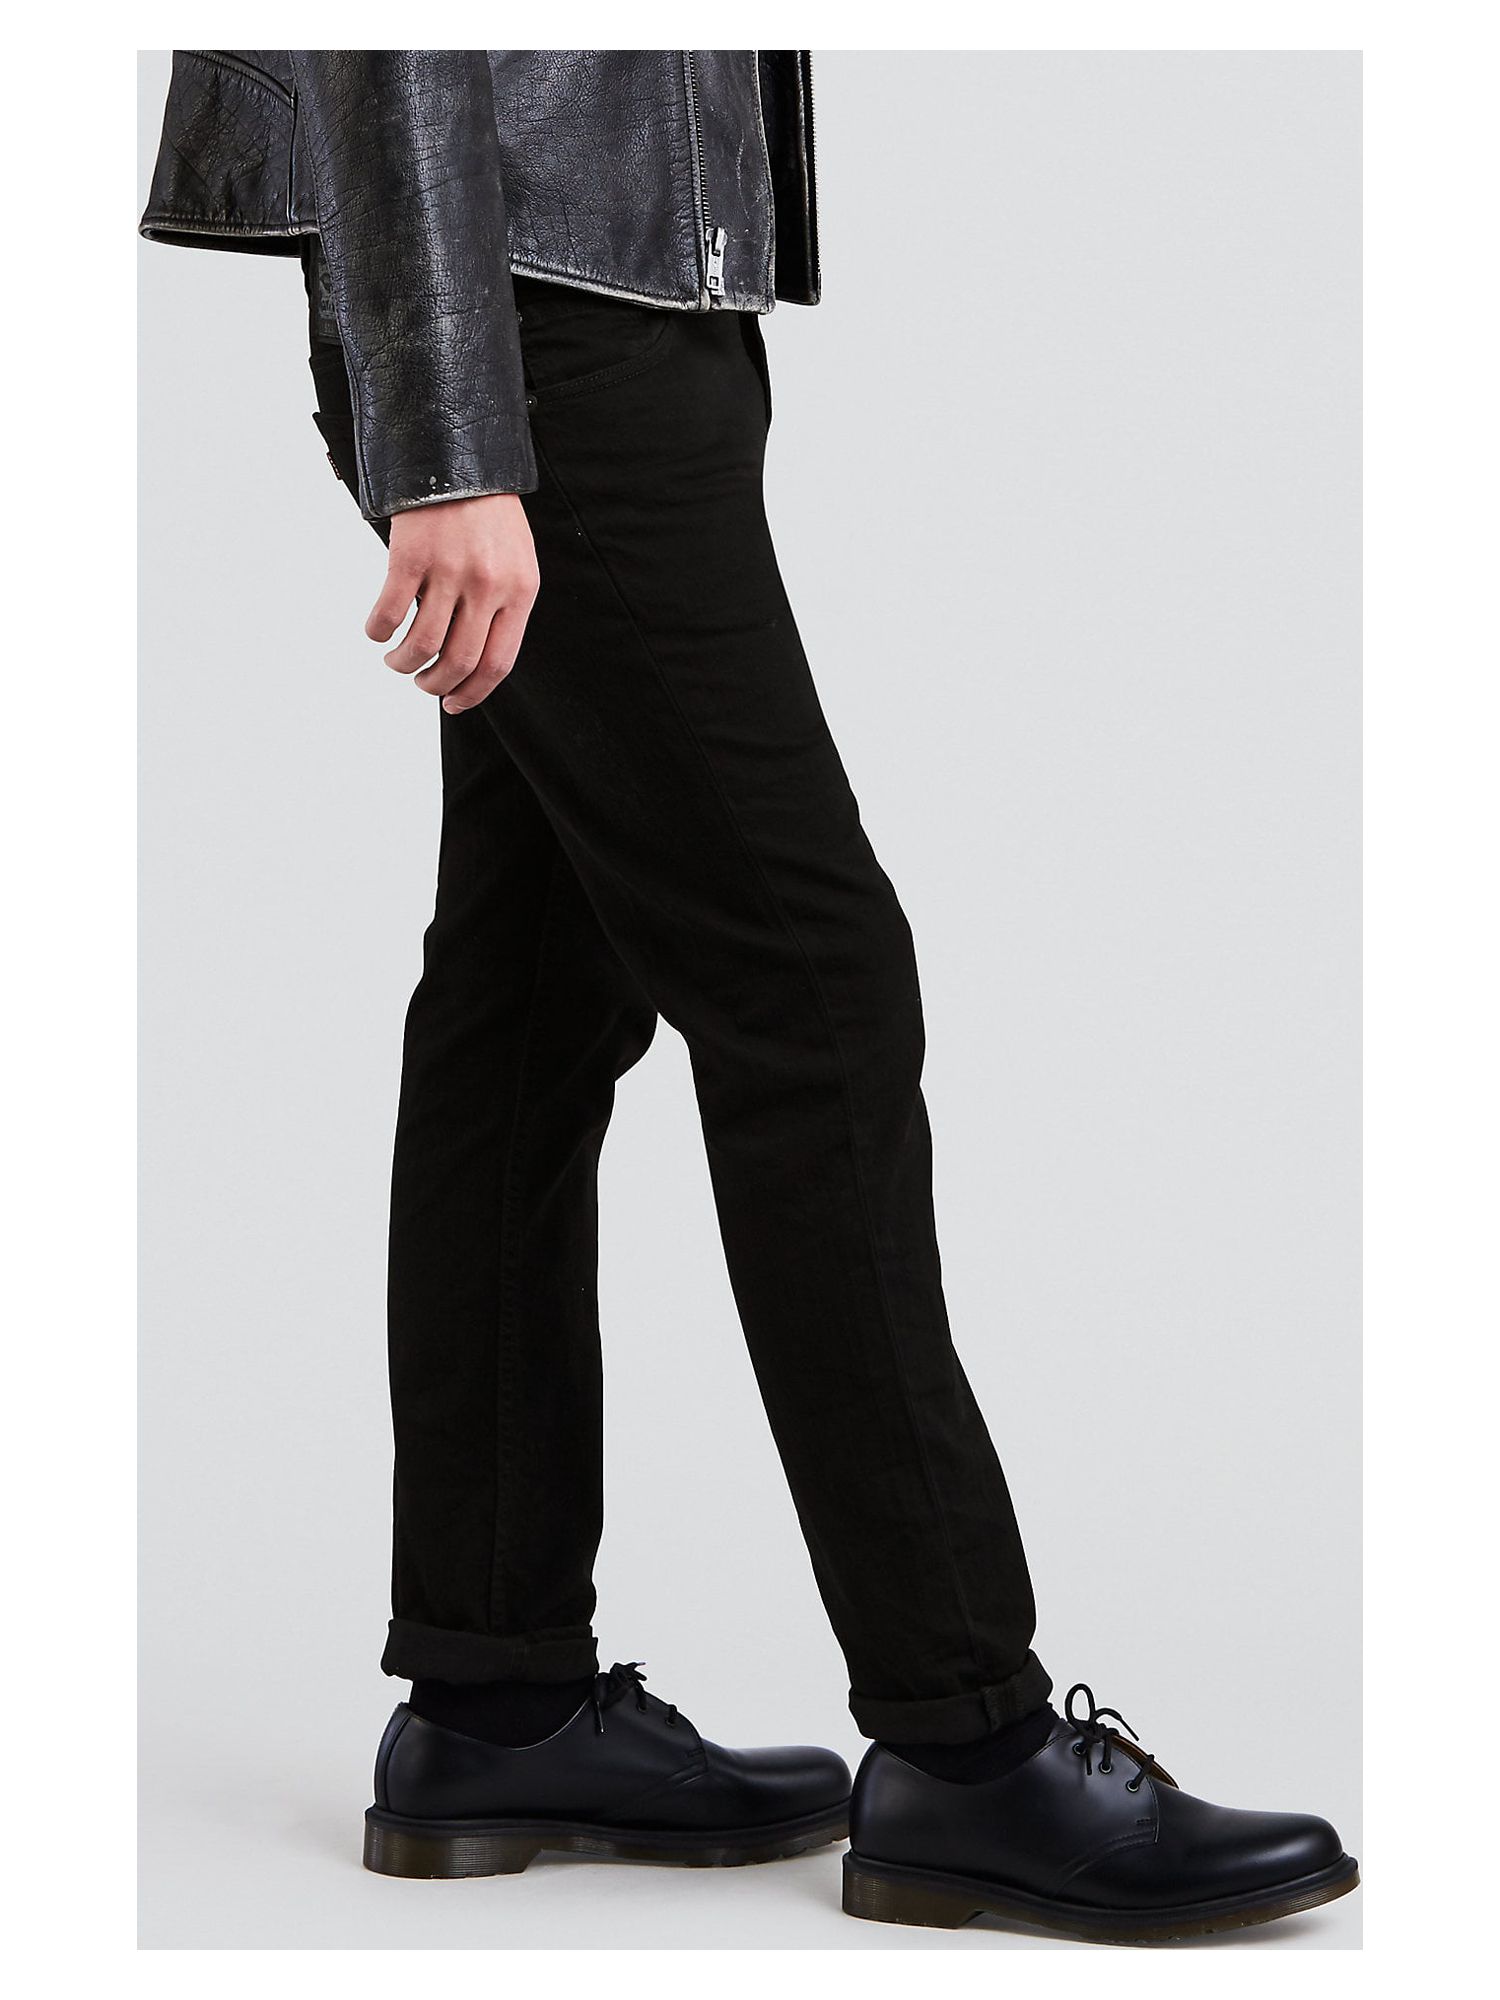 Levi's Men's 511 Slim Fit Jeans - image 3 of 7